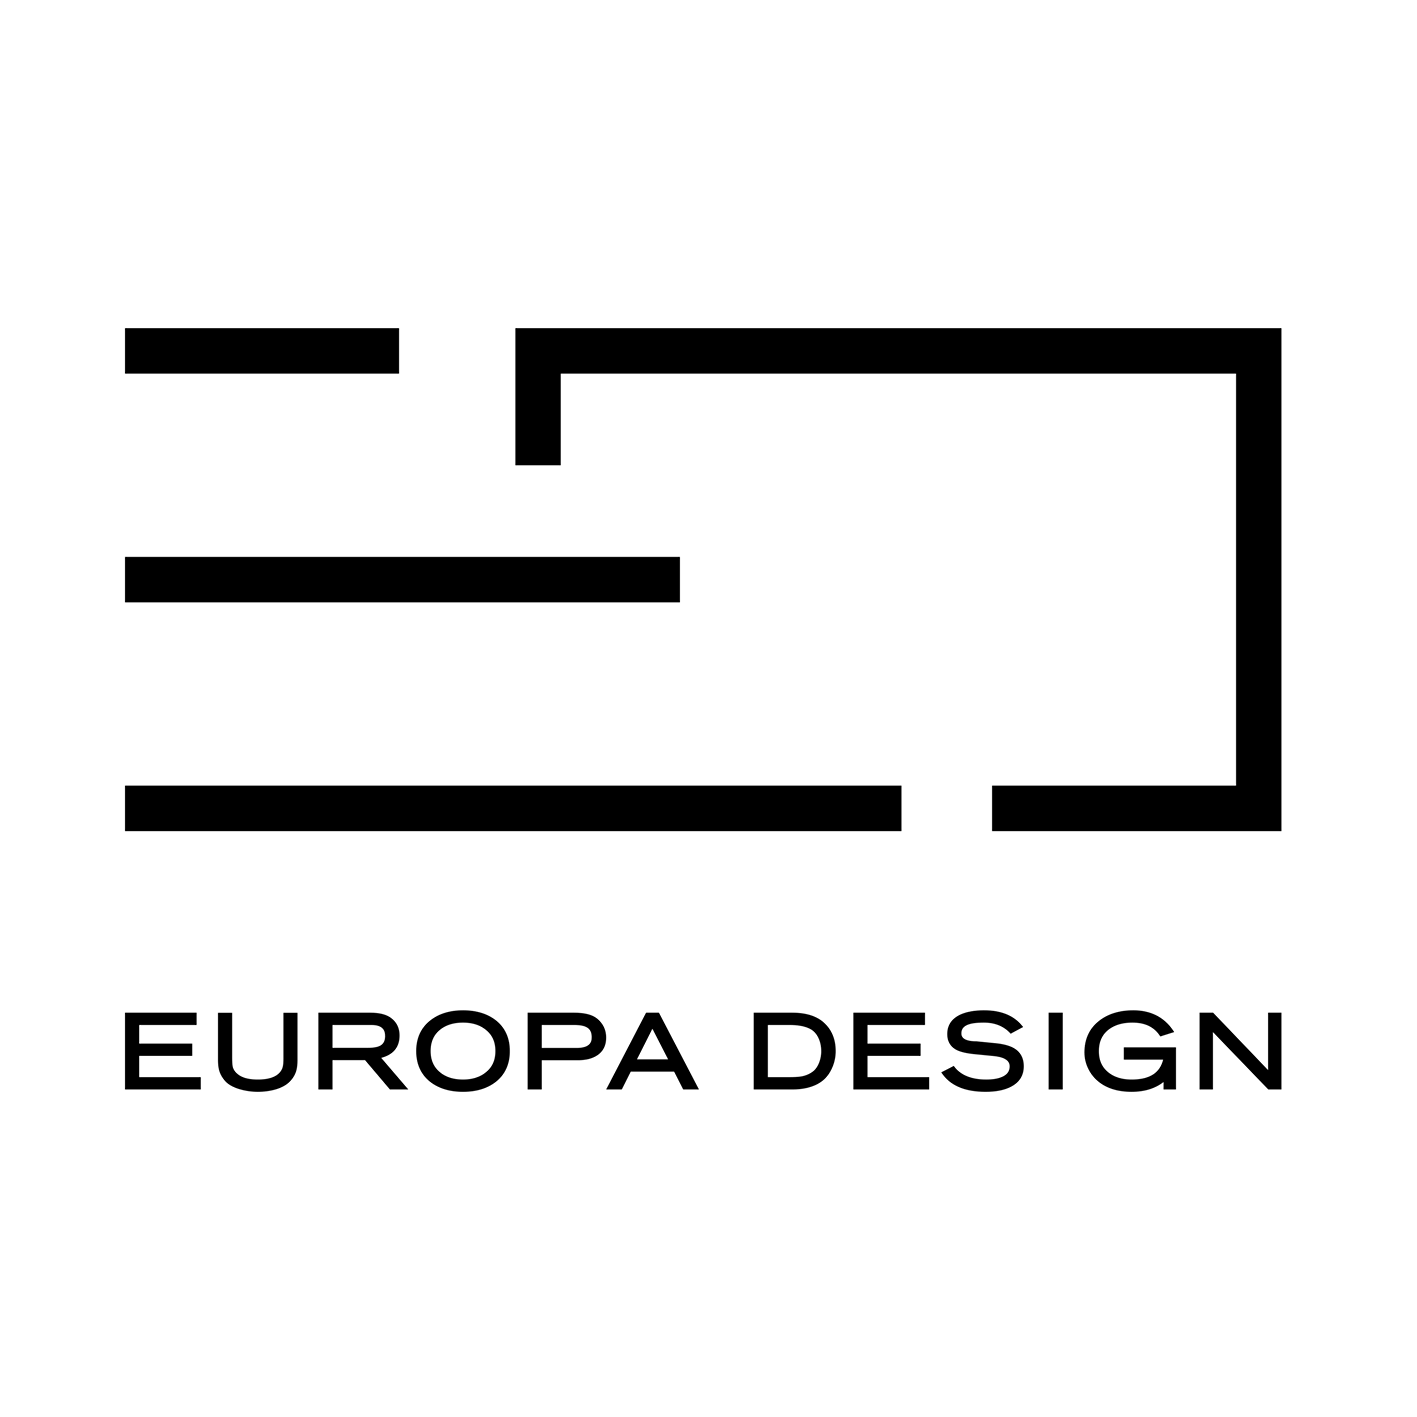 EUROPA DESIGN